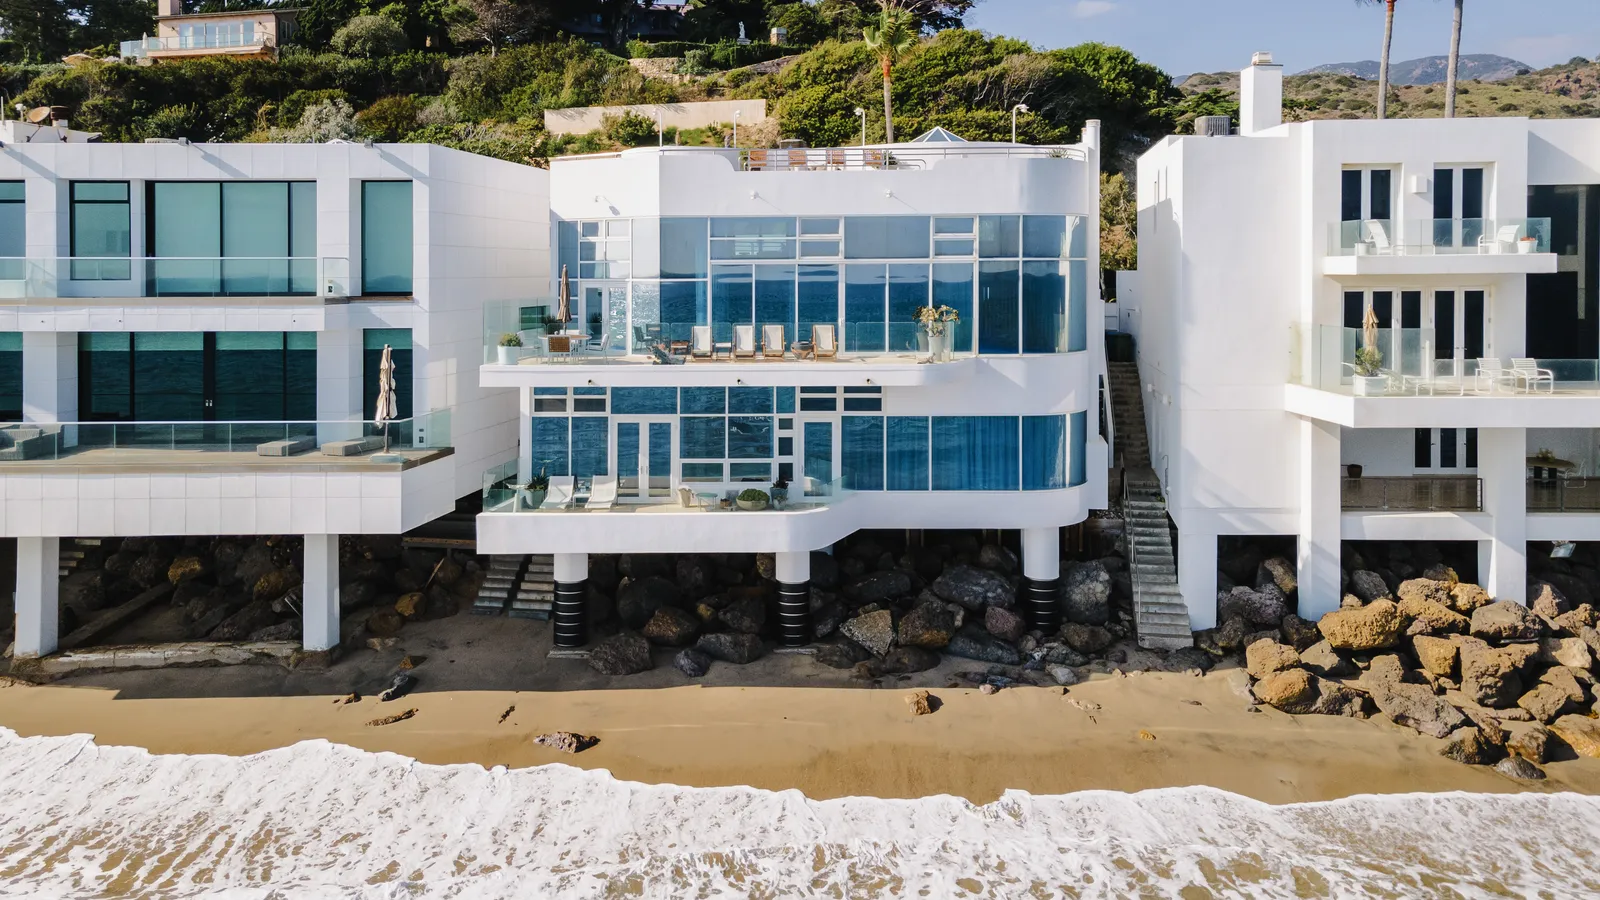 Halle Berry's Modern Malibu Beach Home: An Opulent Haven